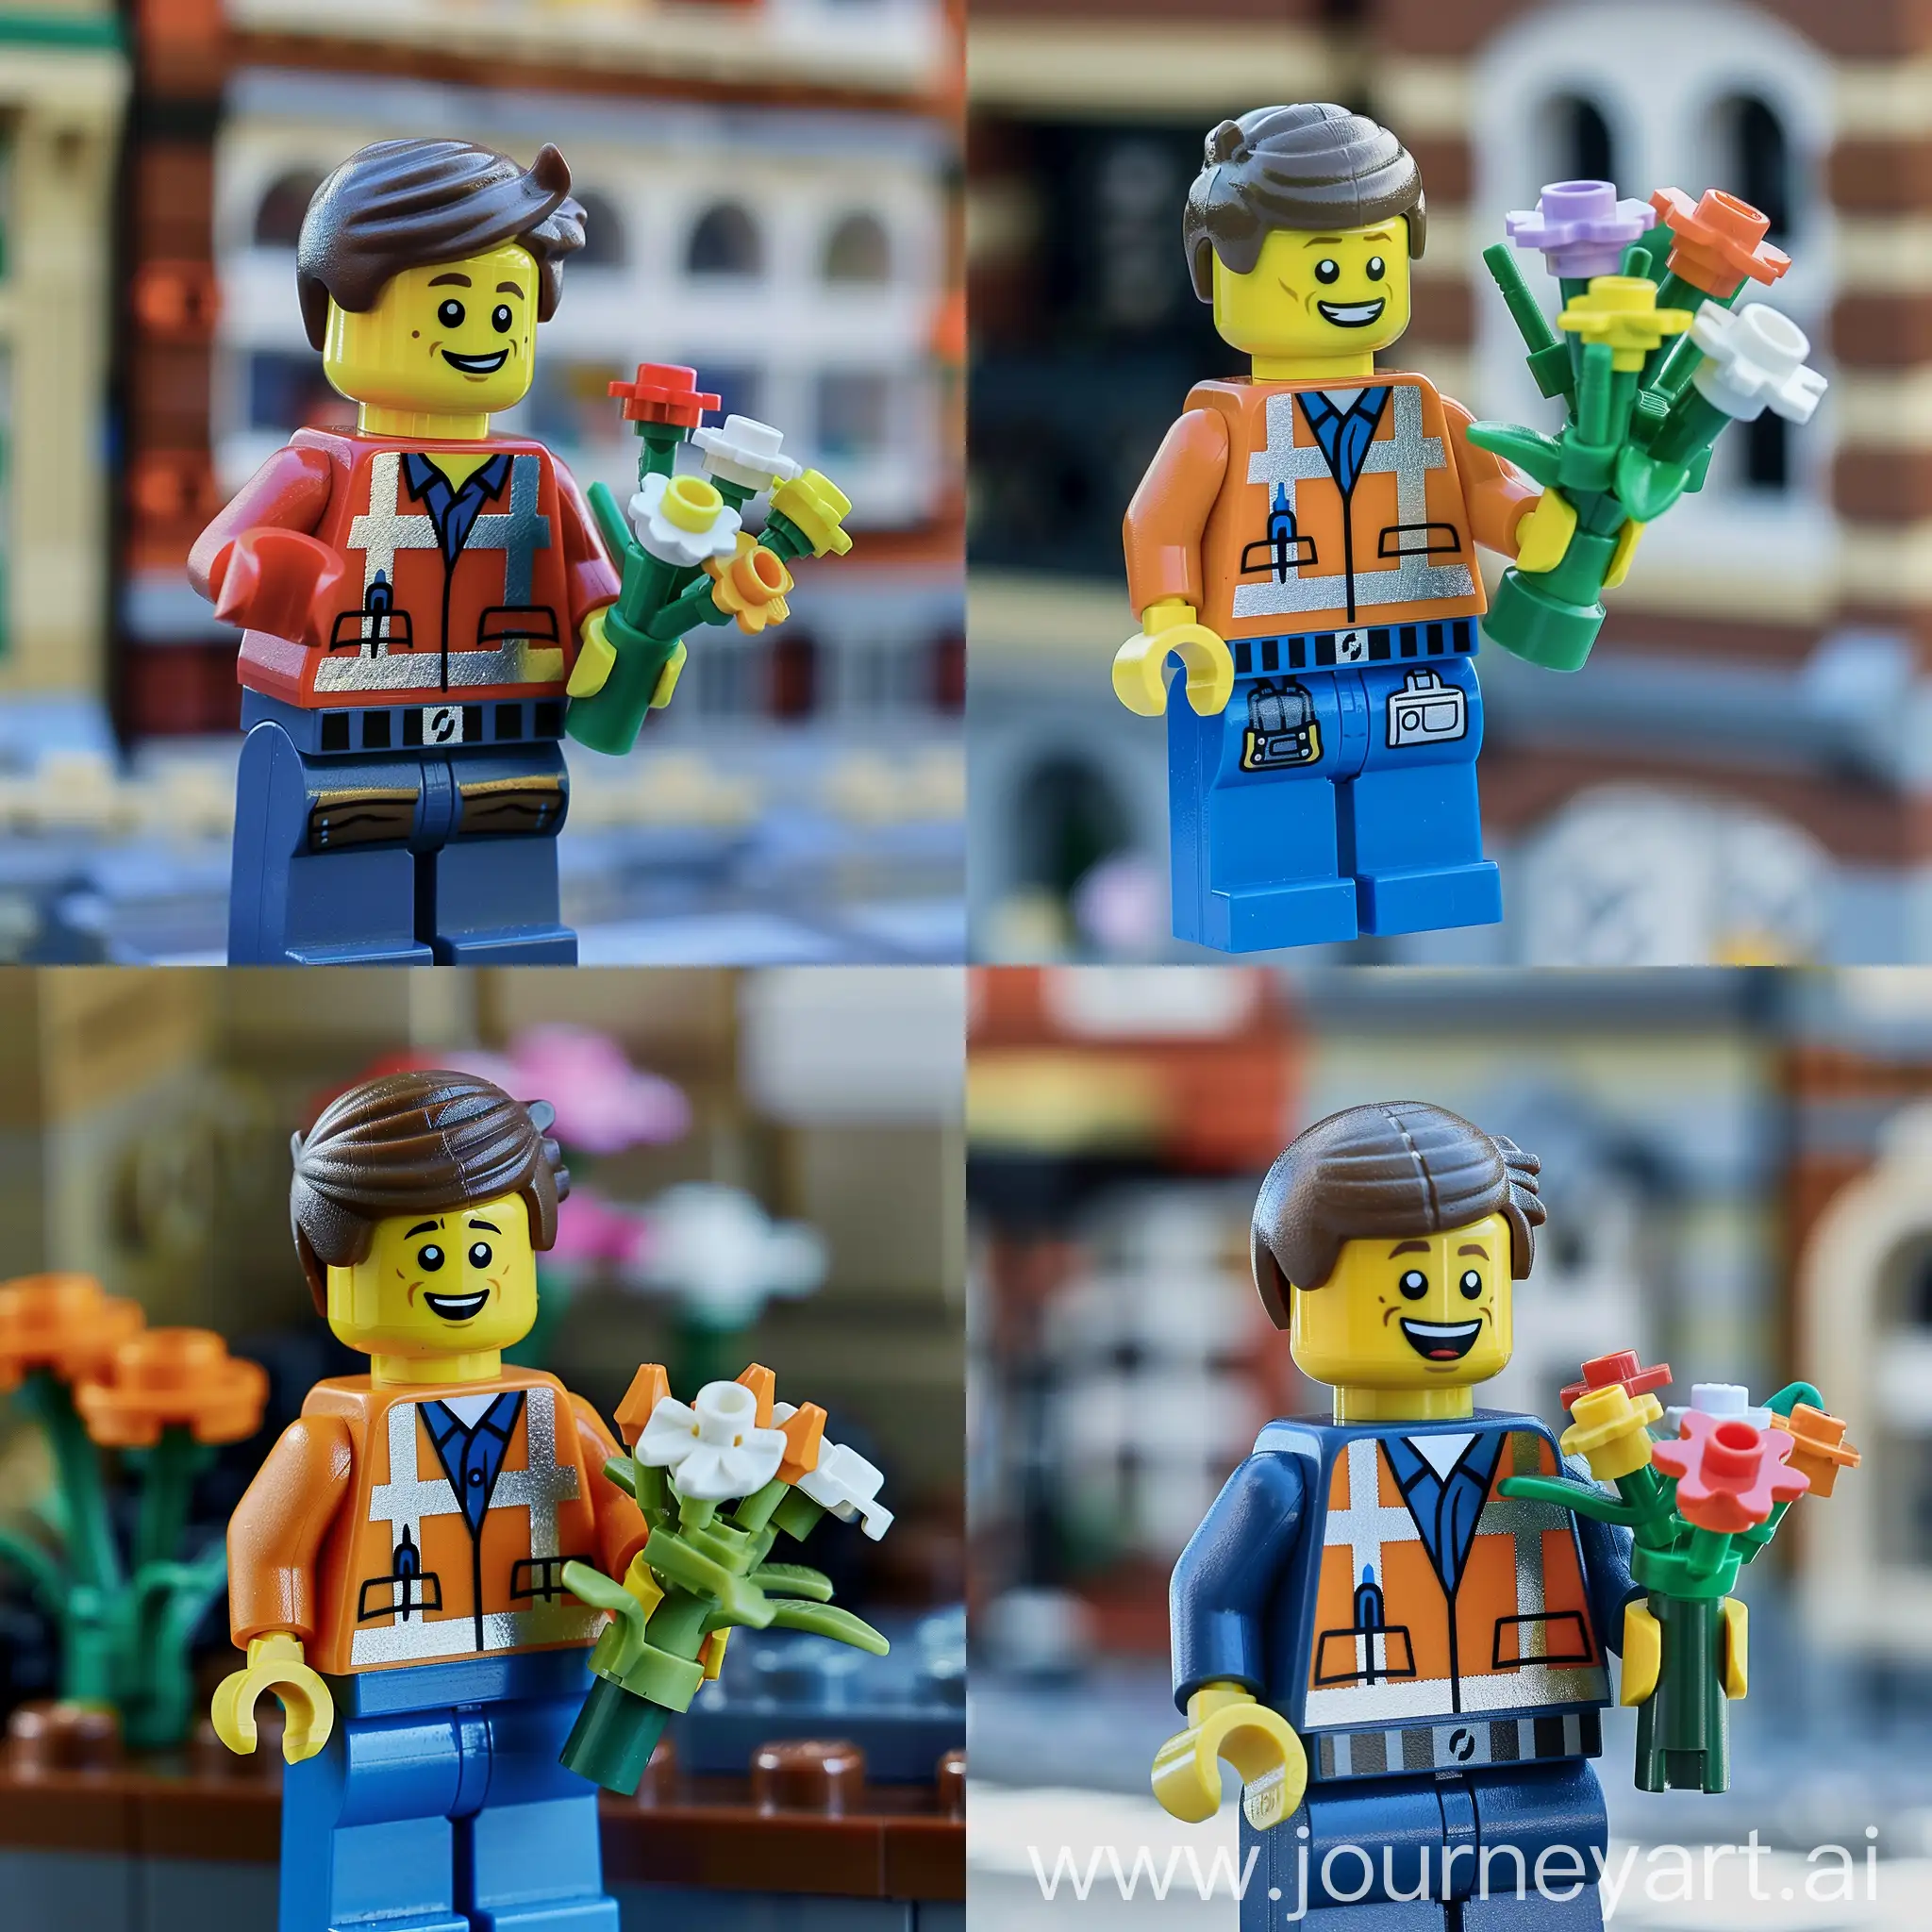 Lego man holding flowers